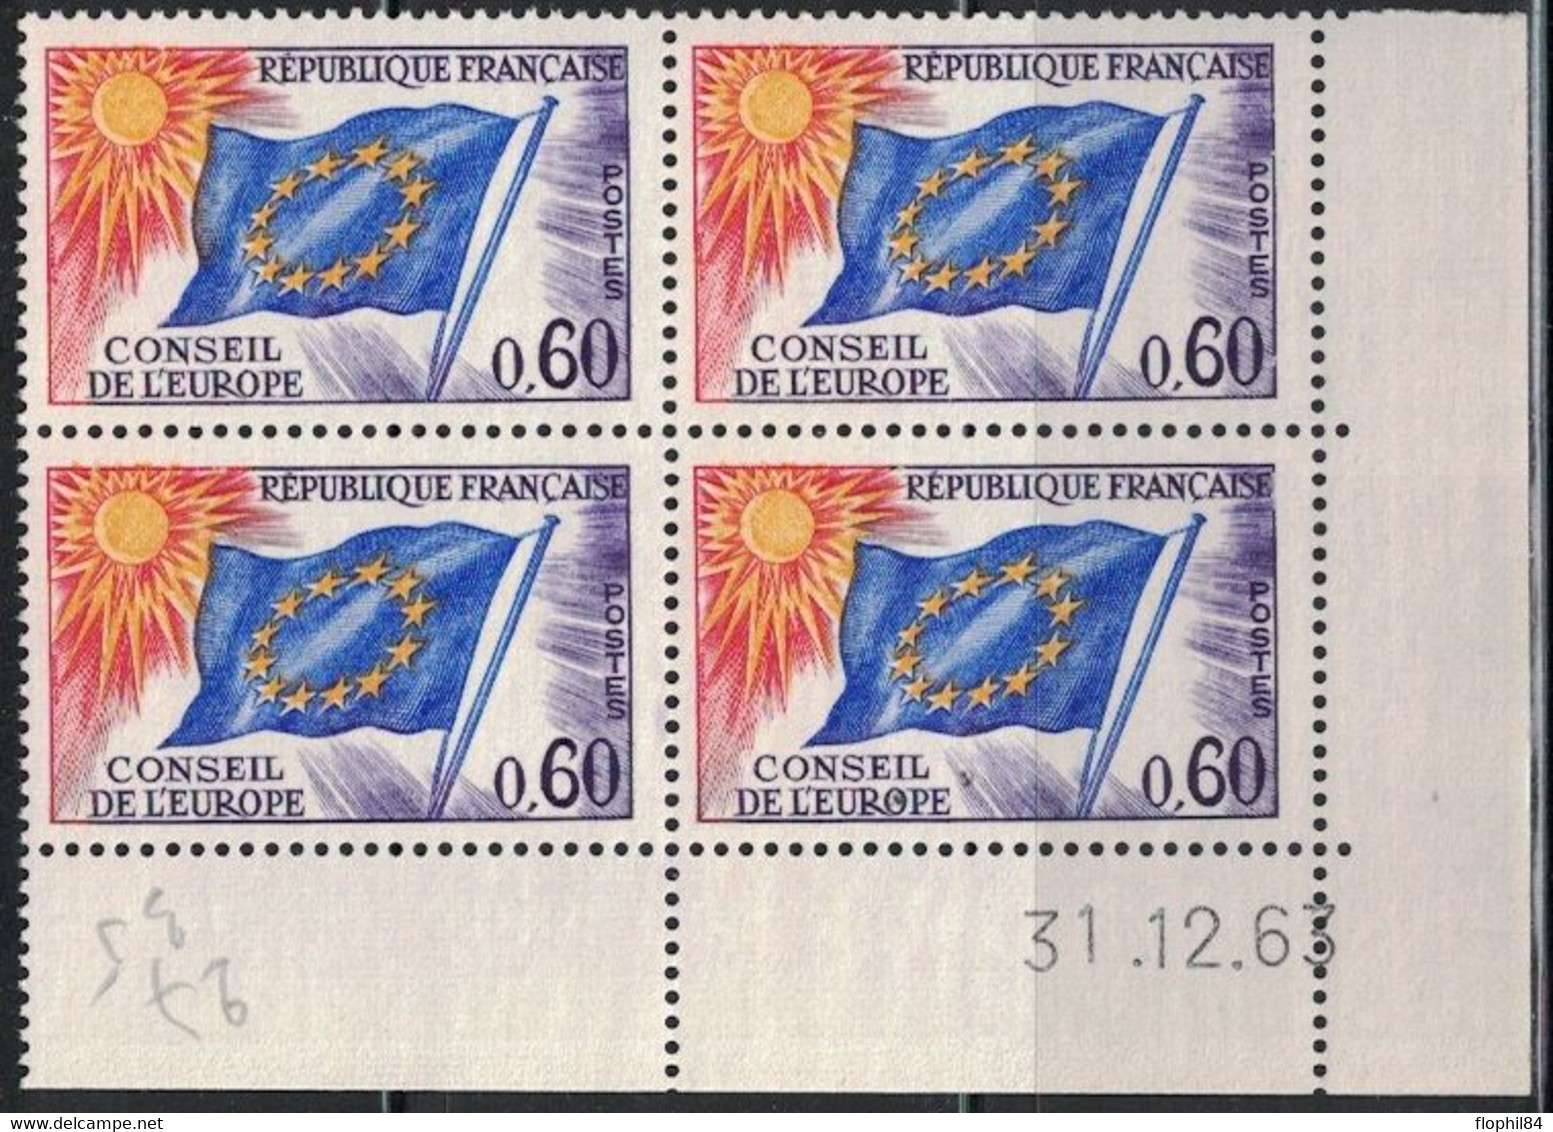 COIN DATE - SERVICE N°34 - 0f60 - CONSEIL DE L'EUROPE - 31-12-1963 - Cote 7€50. - Servizio